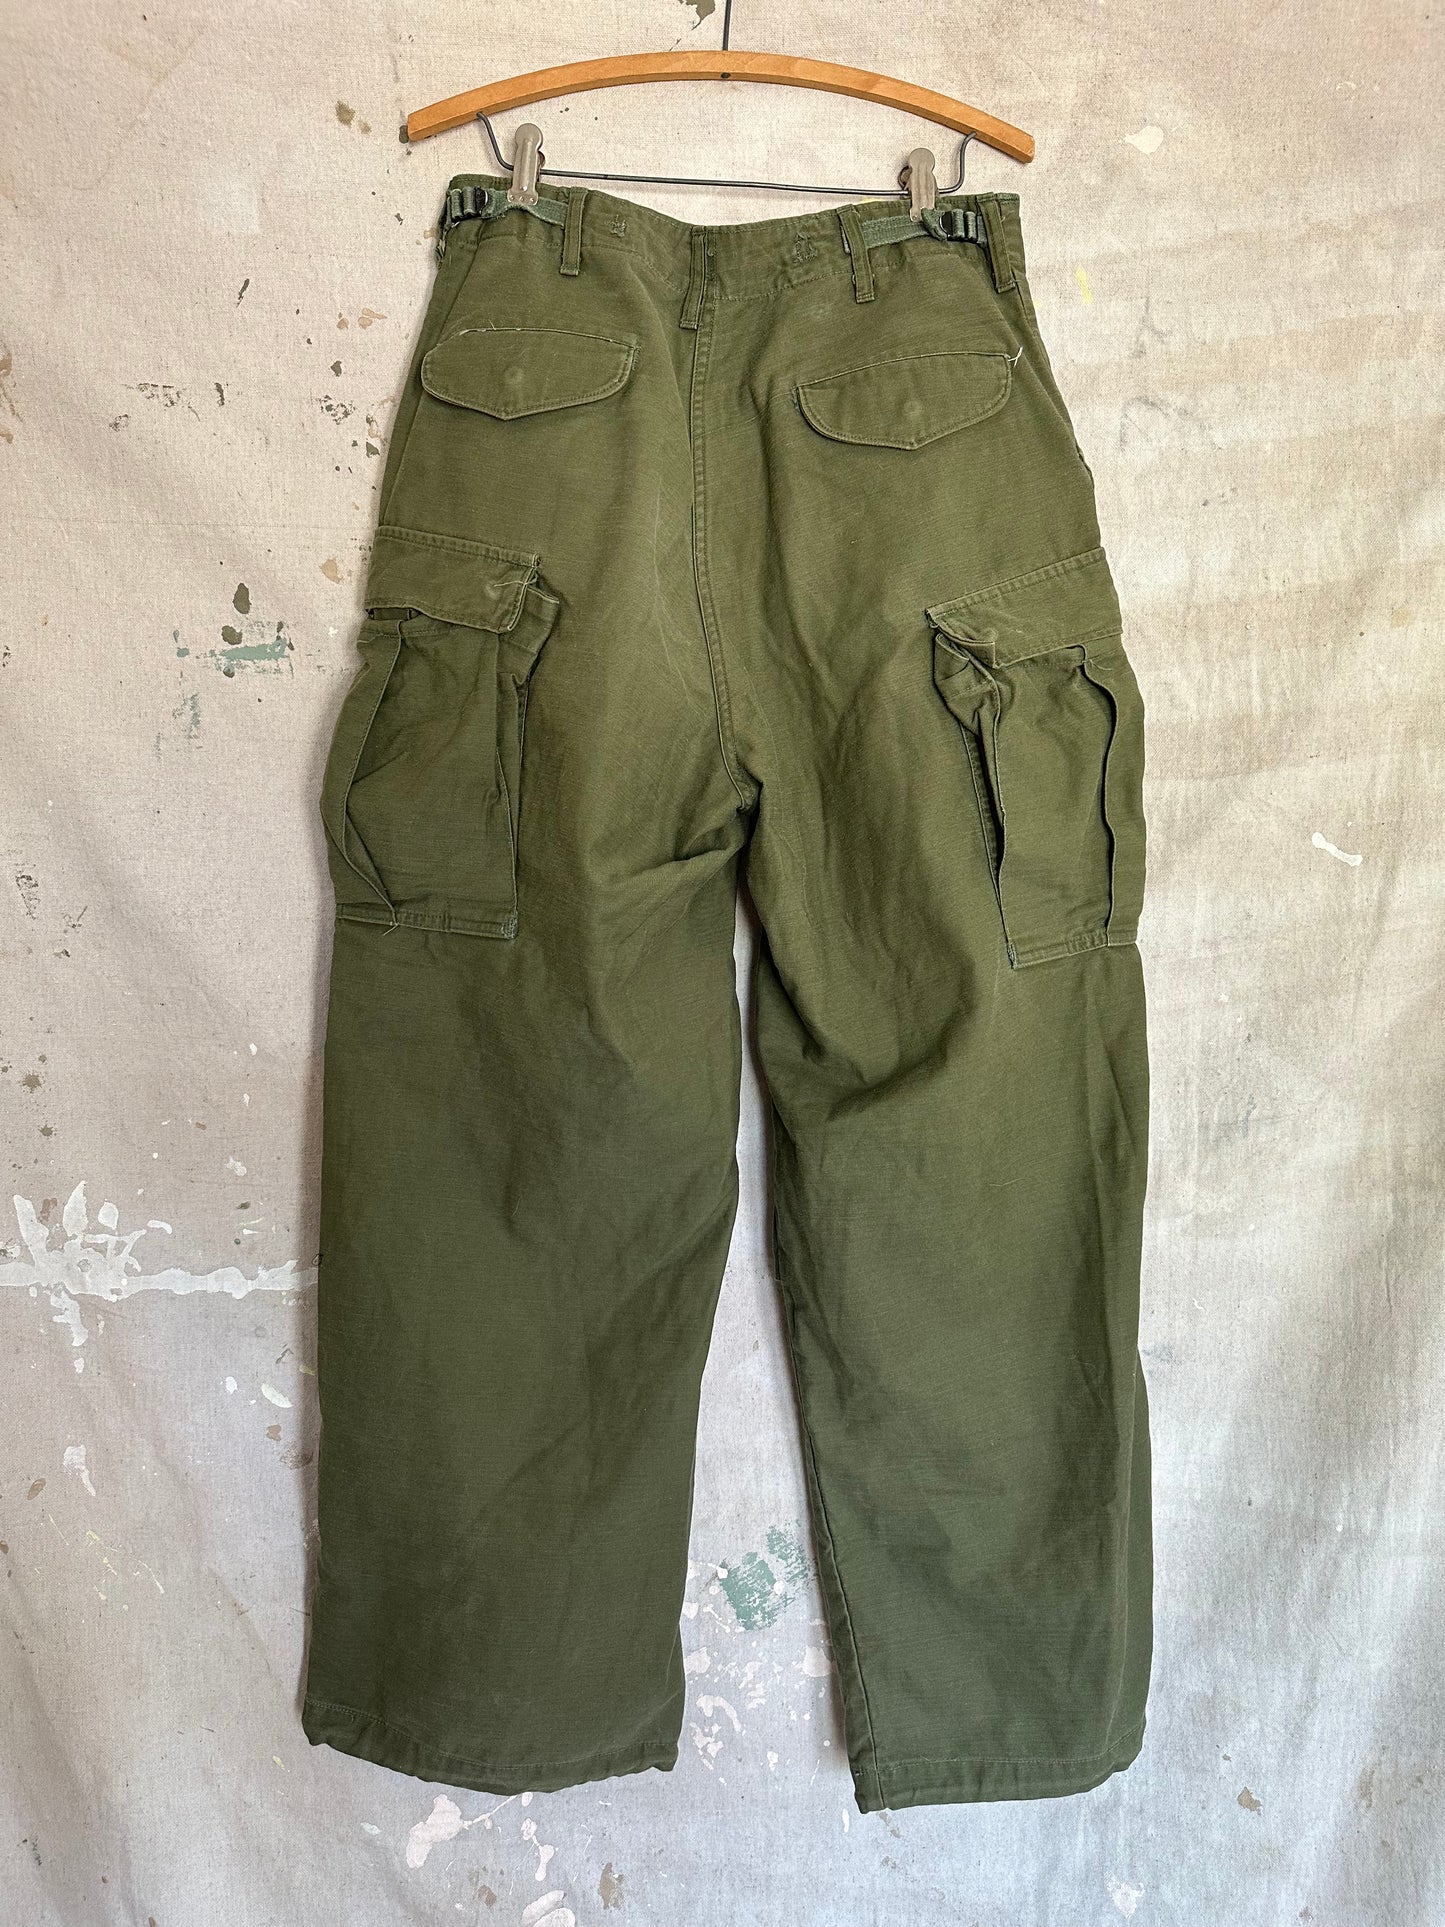 80s OG-107 Army Utility Pants